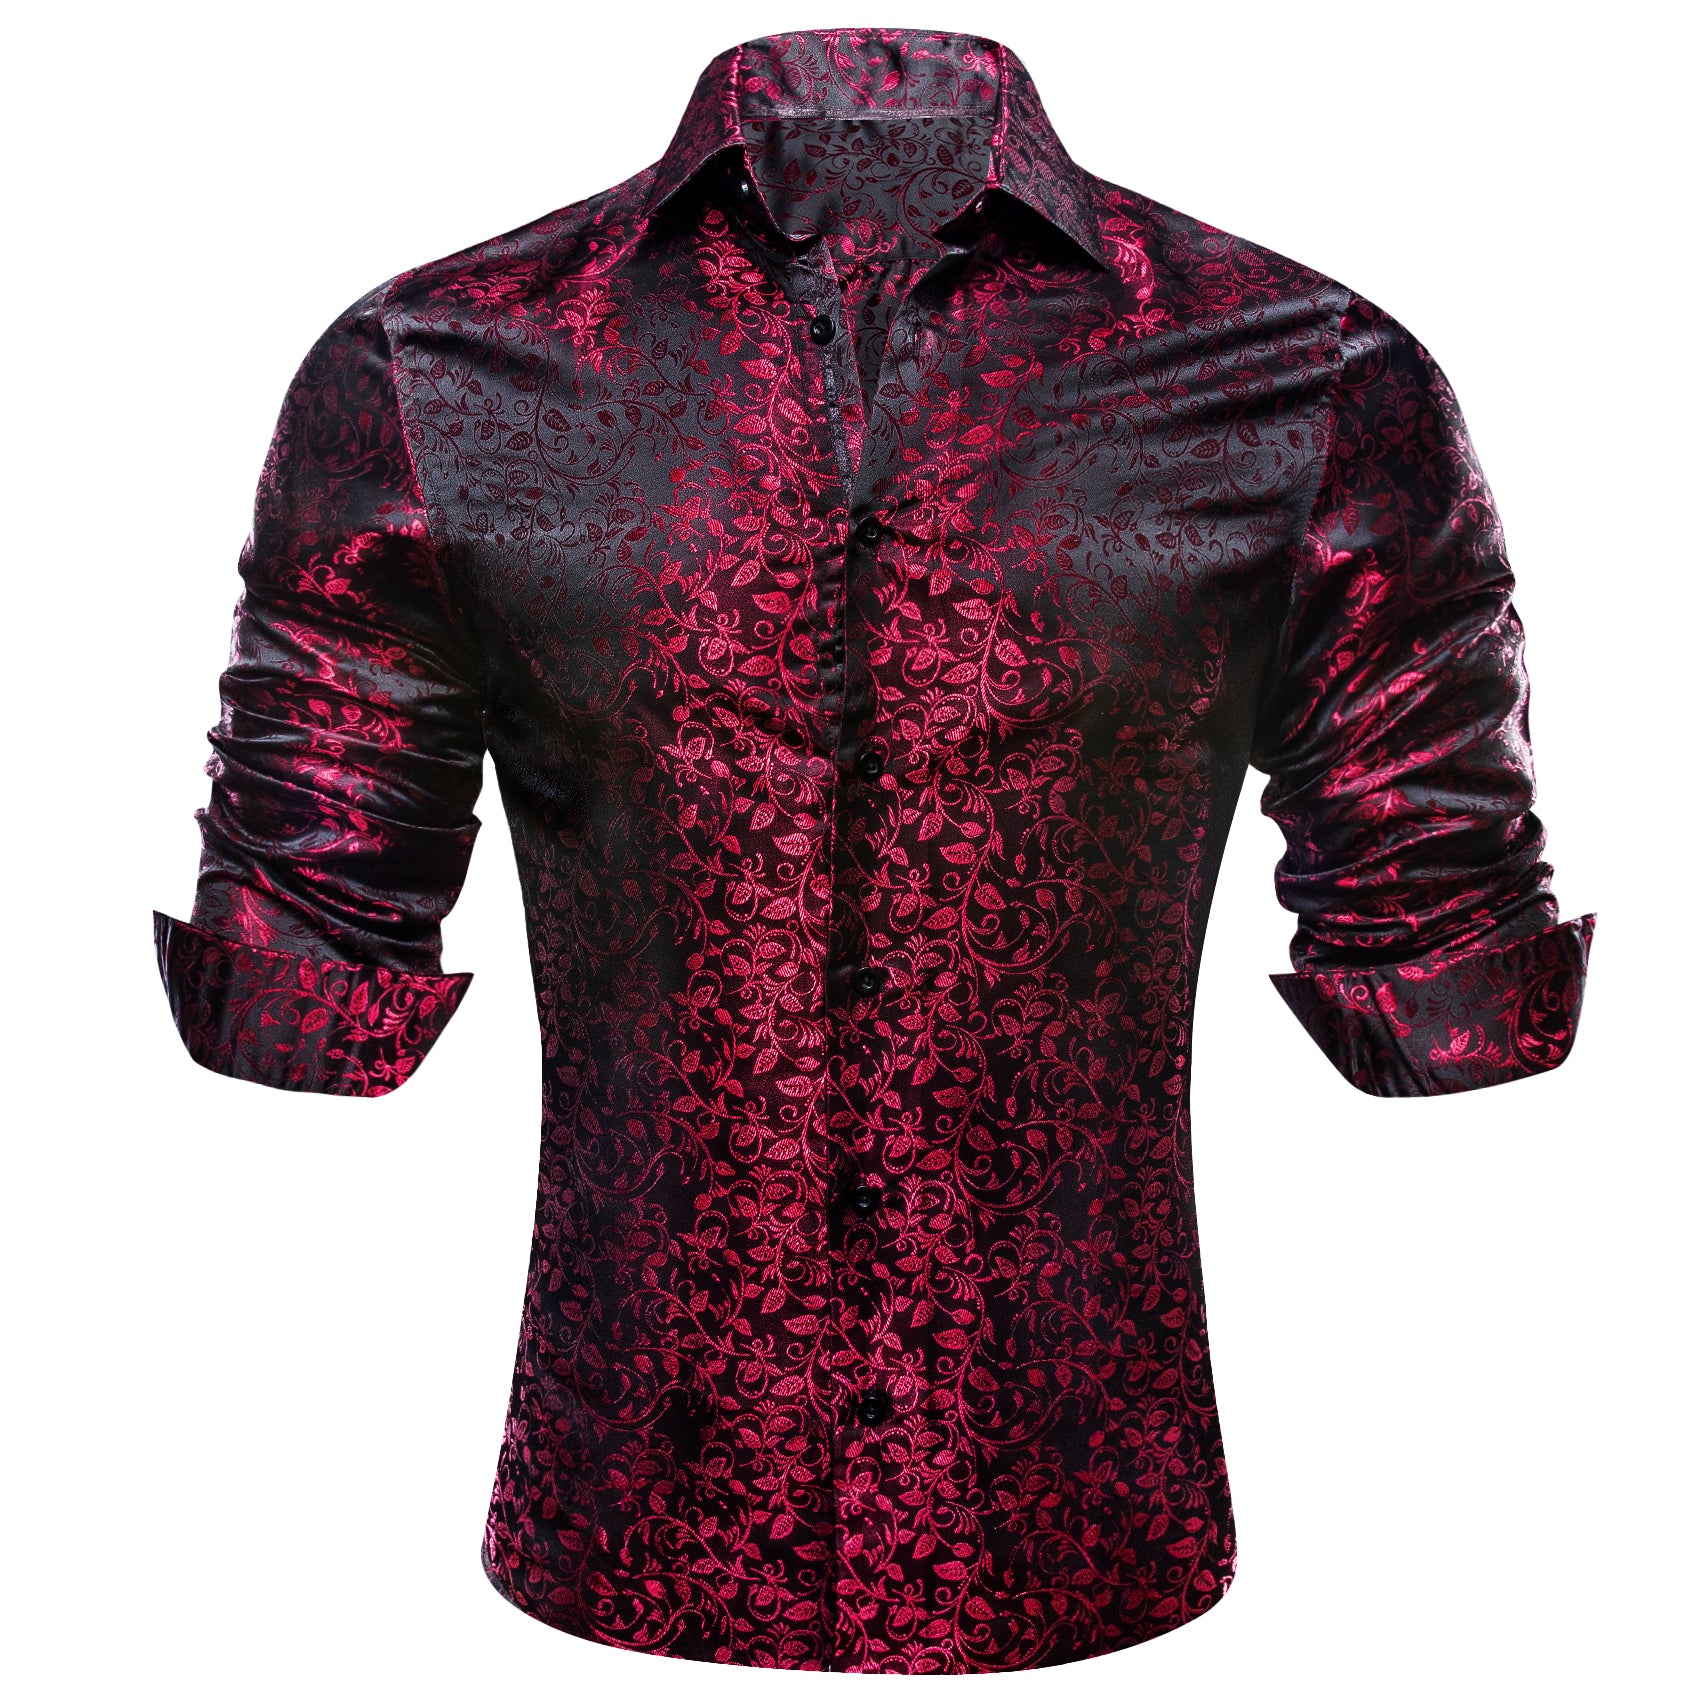 Barry.wang Deep Red Black Paisley Silk  Shirt